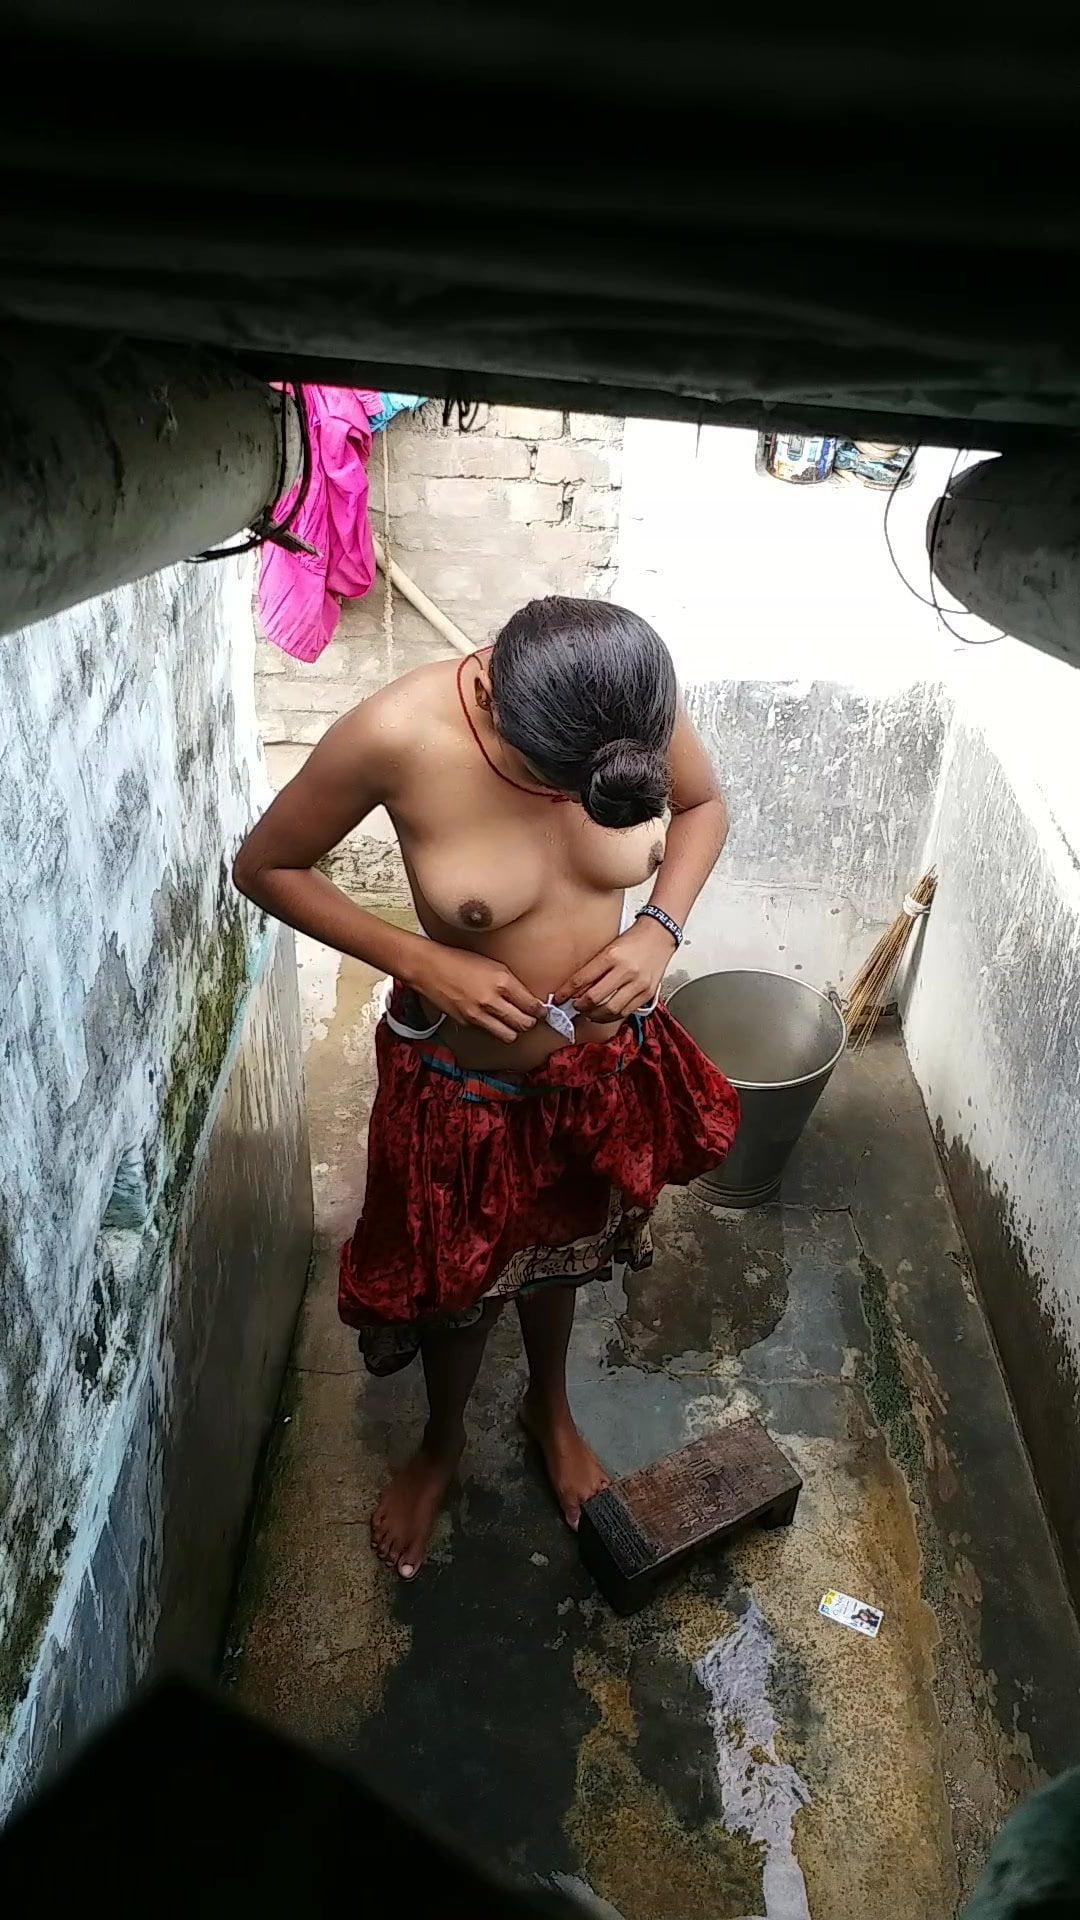 Bihar Ki Nangi Sex Bp Picture Nangi Nangi Chalu Chodne Wali - Saali Ki Chudai Bathroom Me, Free Indian Porn cc: xHamster